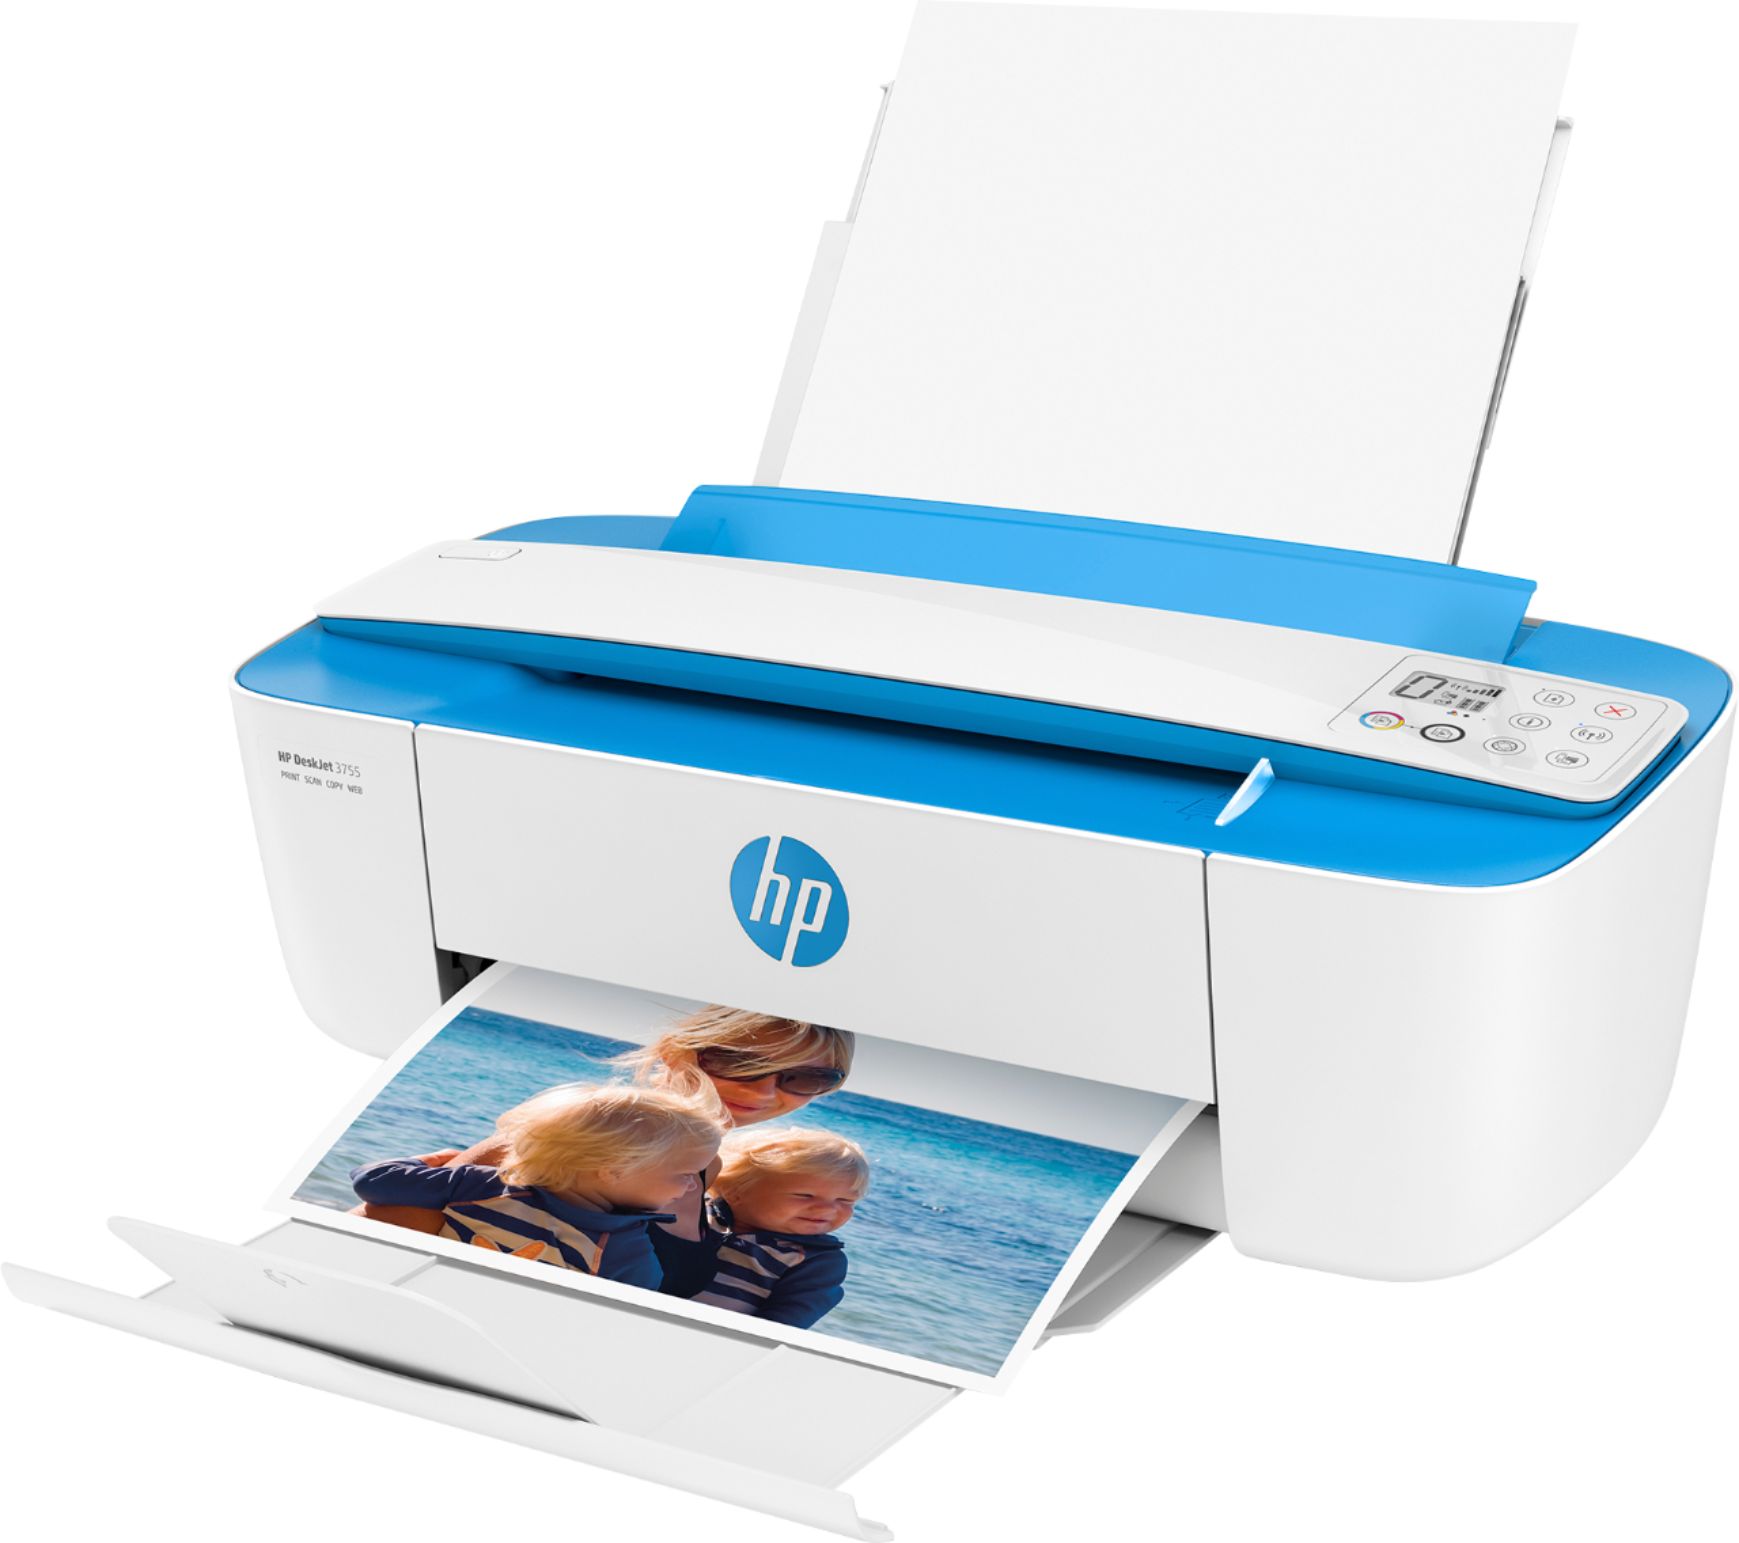 HP DeskJet 3755 All-in-One Instant Ink Ready Inkjet Printer Blue J9V90A#B1H - Best Buy